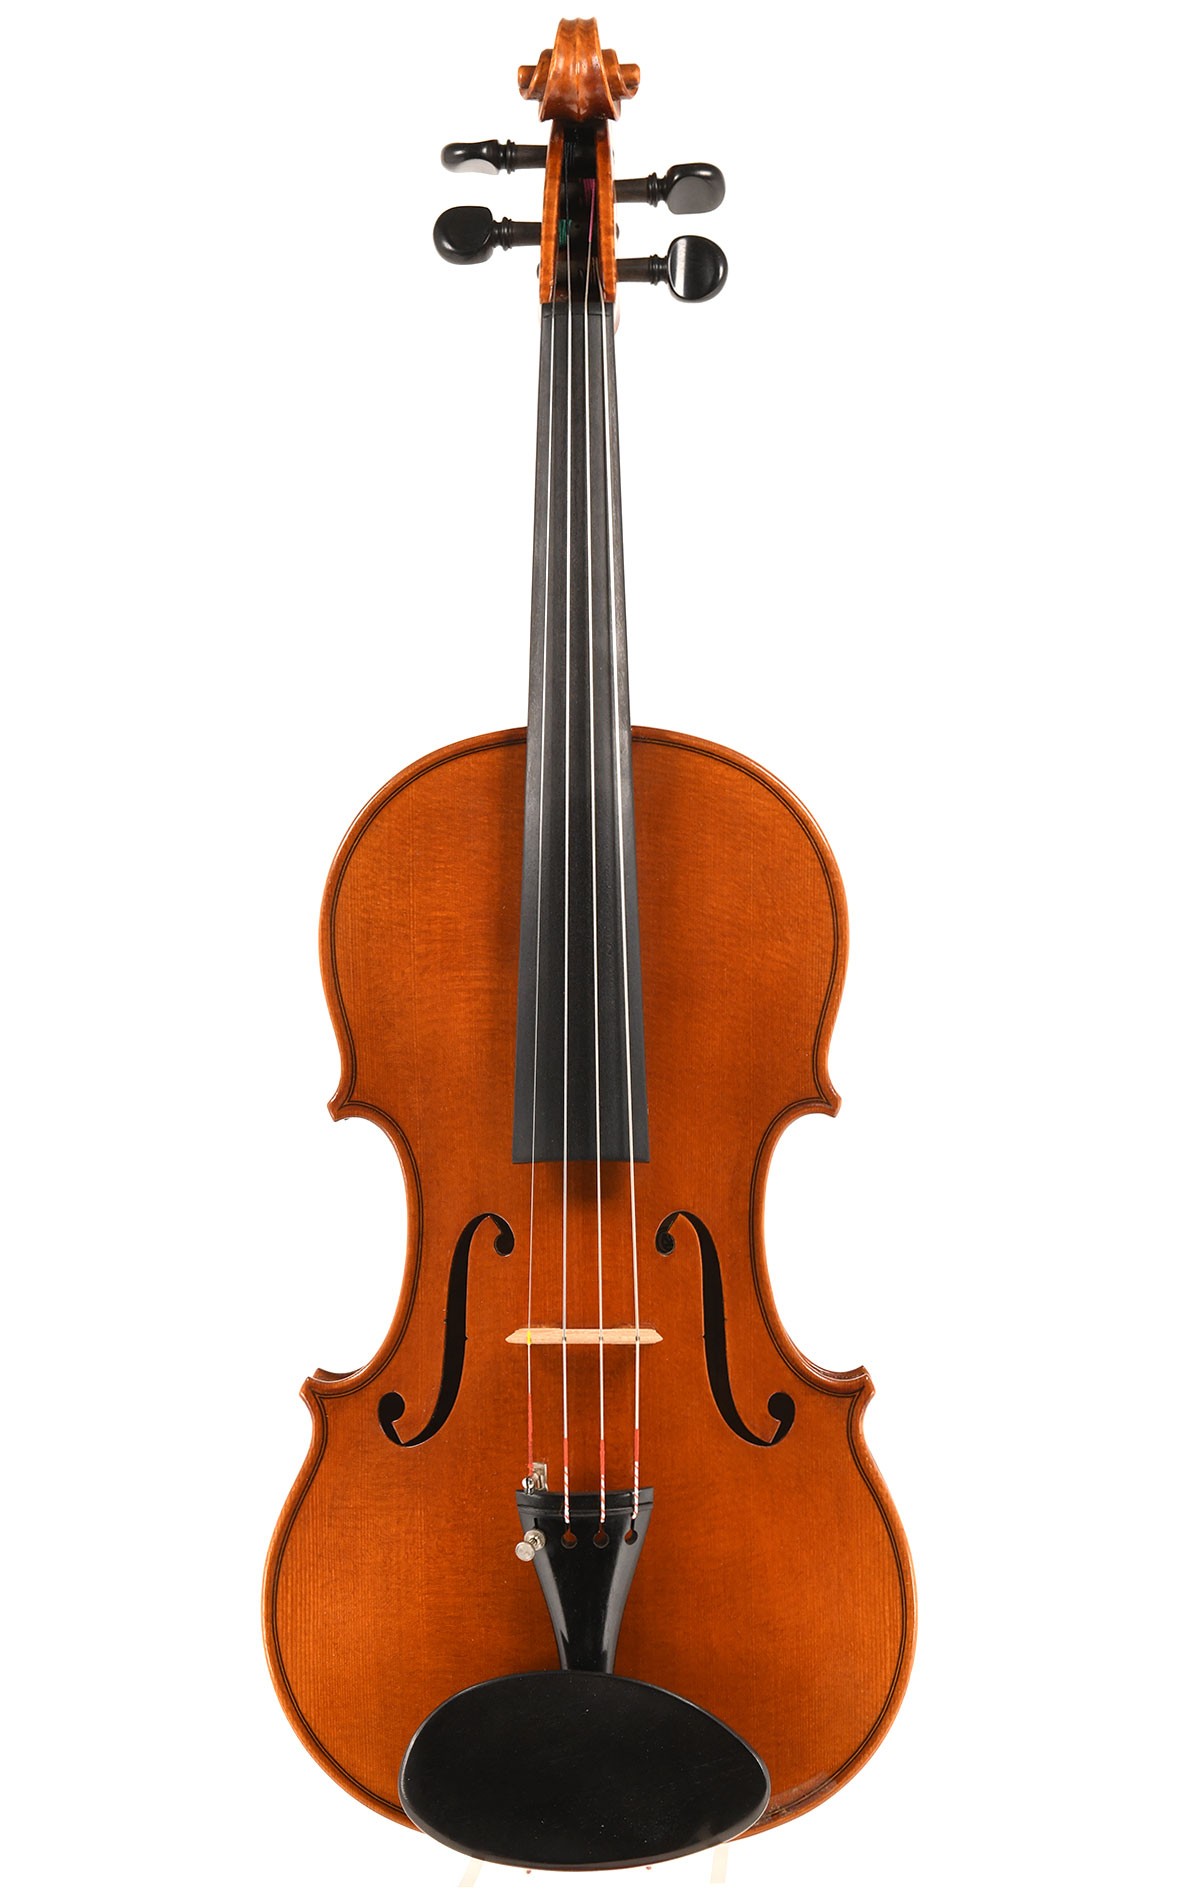 Rare left-handed violin by Kurt Gütter, 1978 (violin for left-handers)